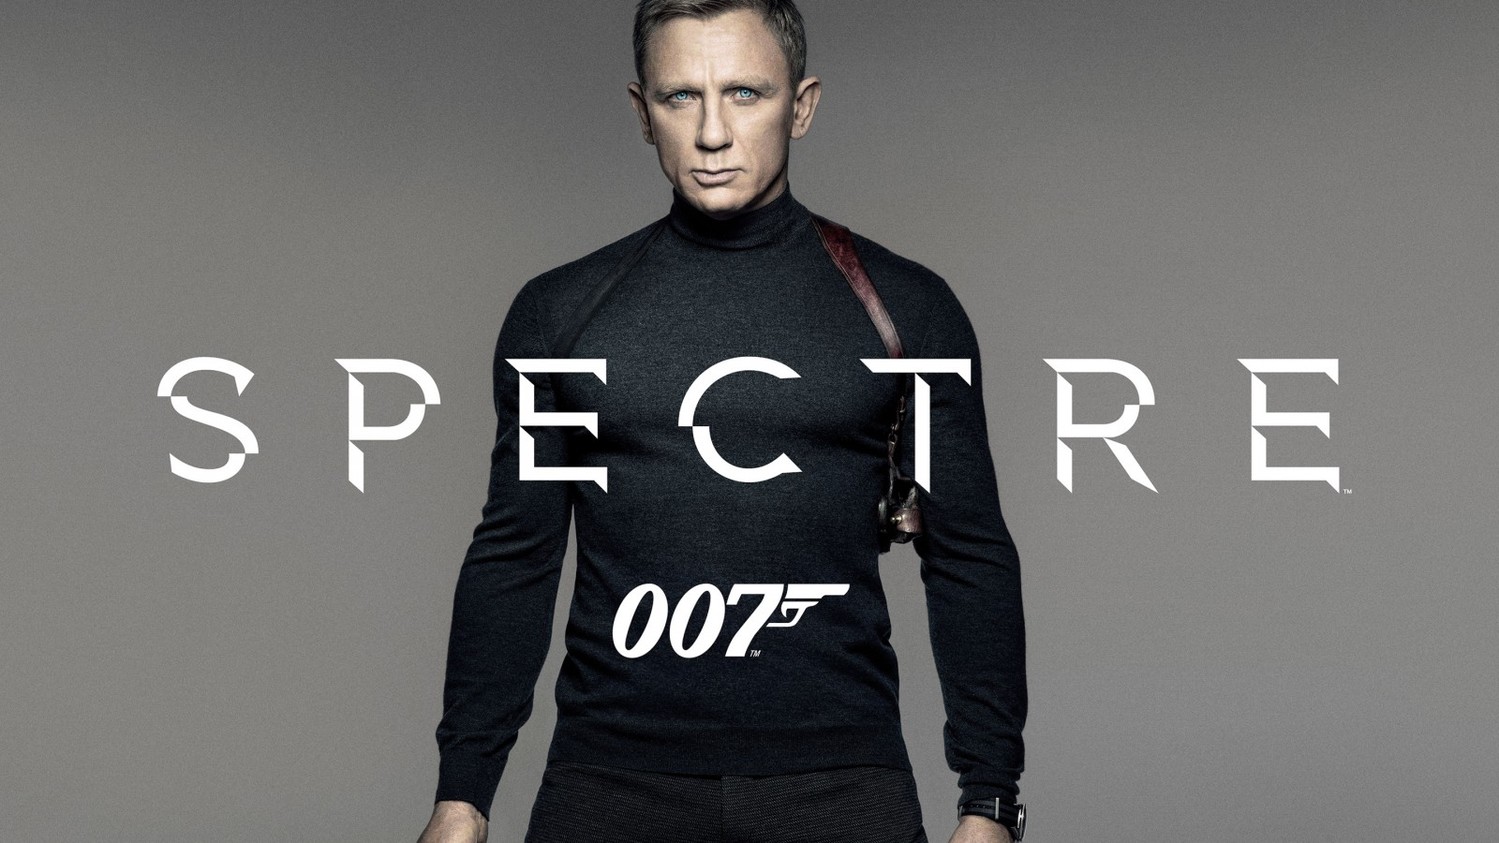 007: Спектр / Spectre (2015)